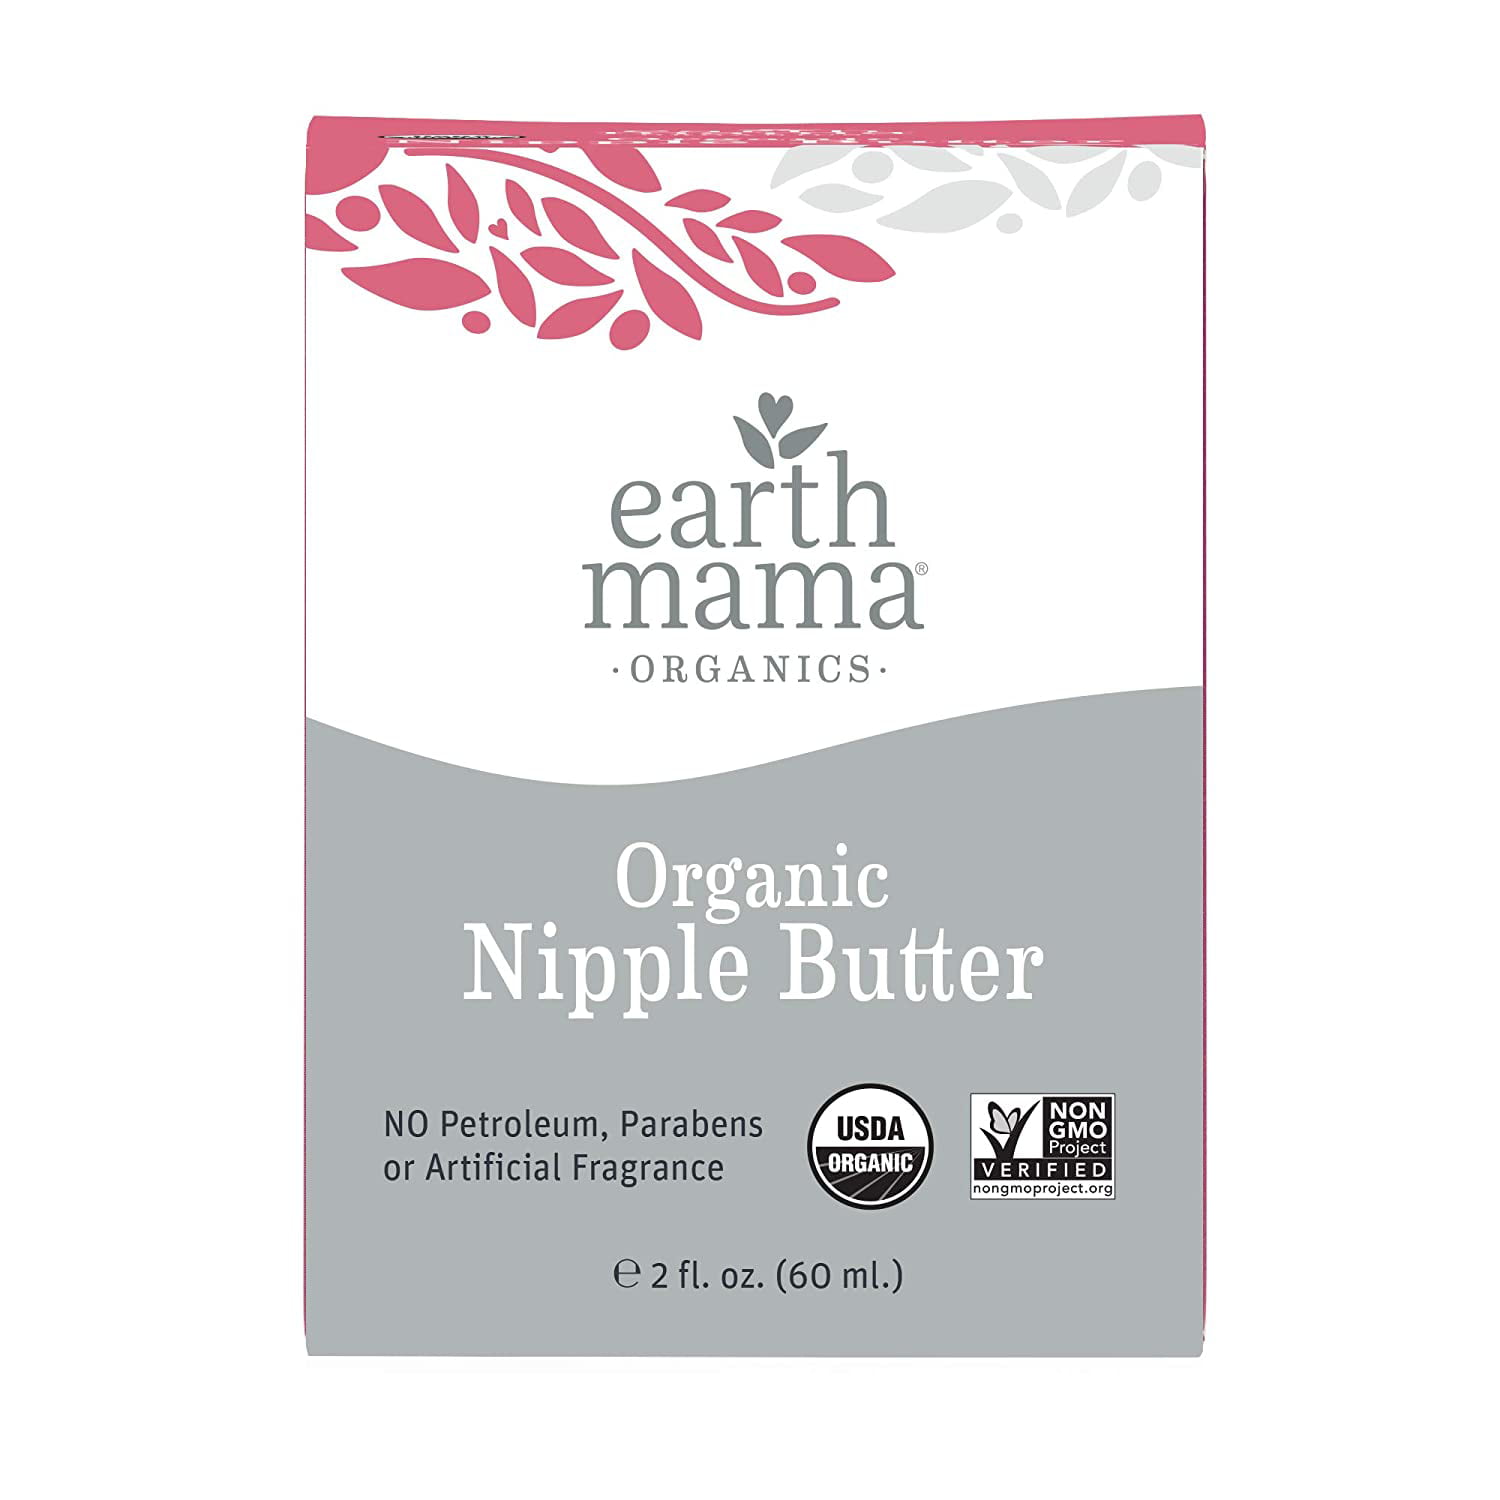 Expired 3/2022 Motherlove nipple cream 1 fl oz - D3 Surplus Outlet